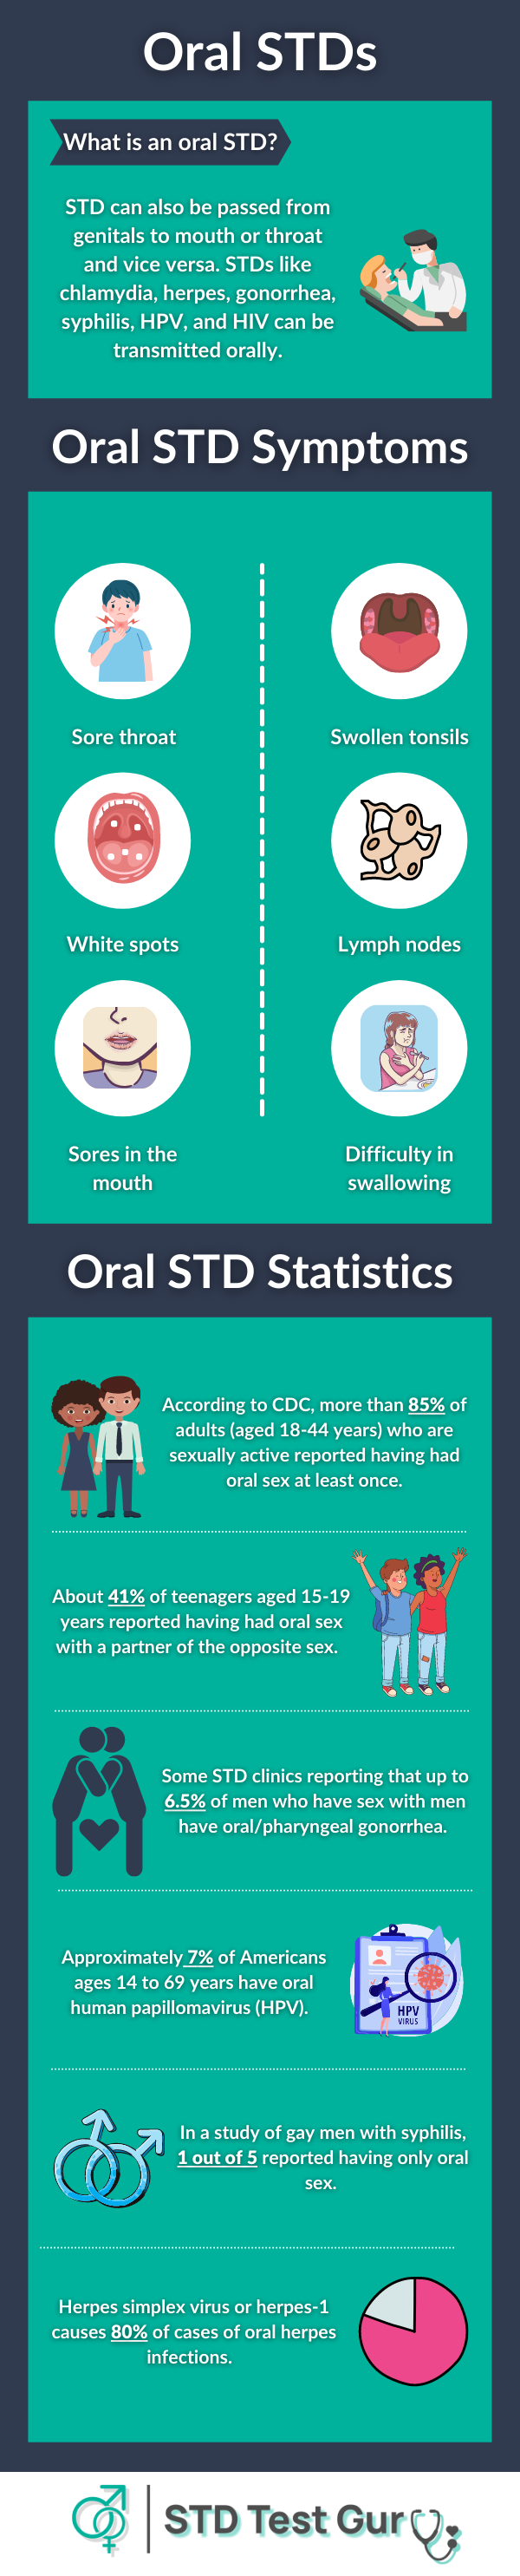 Oral STDs: Symptoms and Statistics